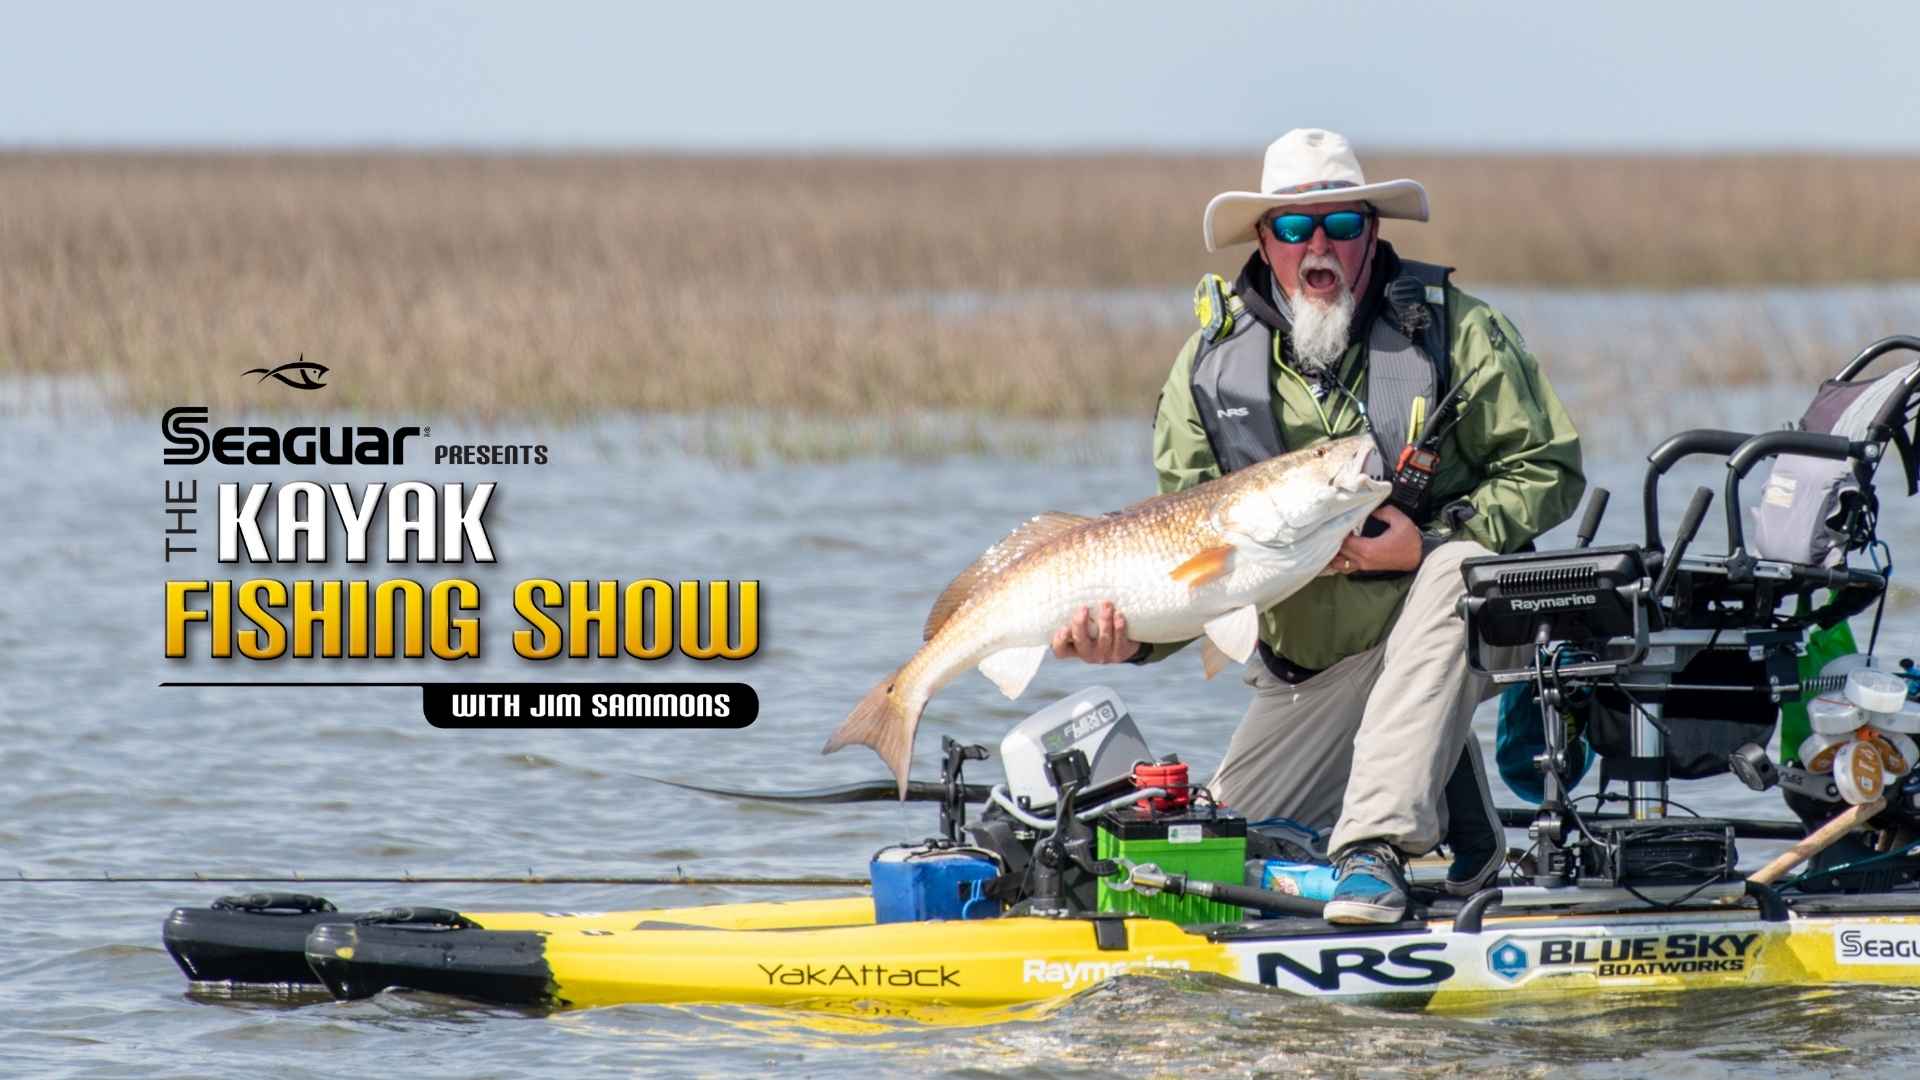 kayak fishing show season 12 premier banner with jim sammons